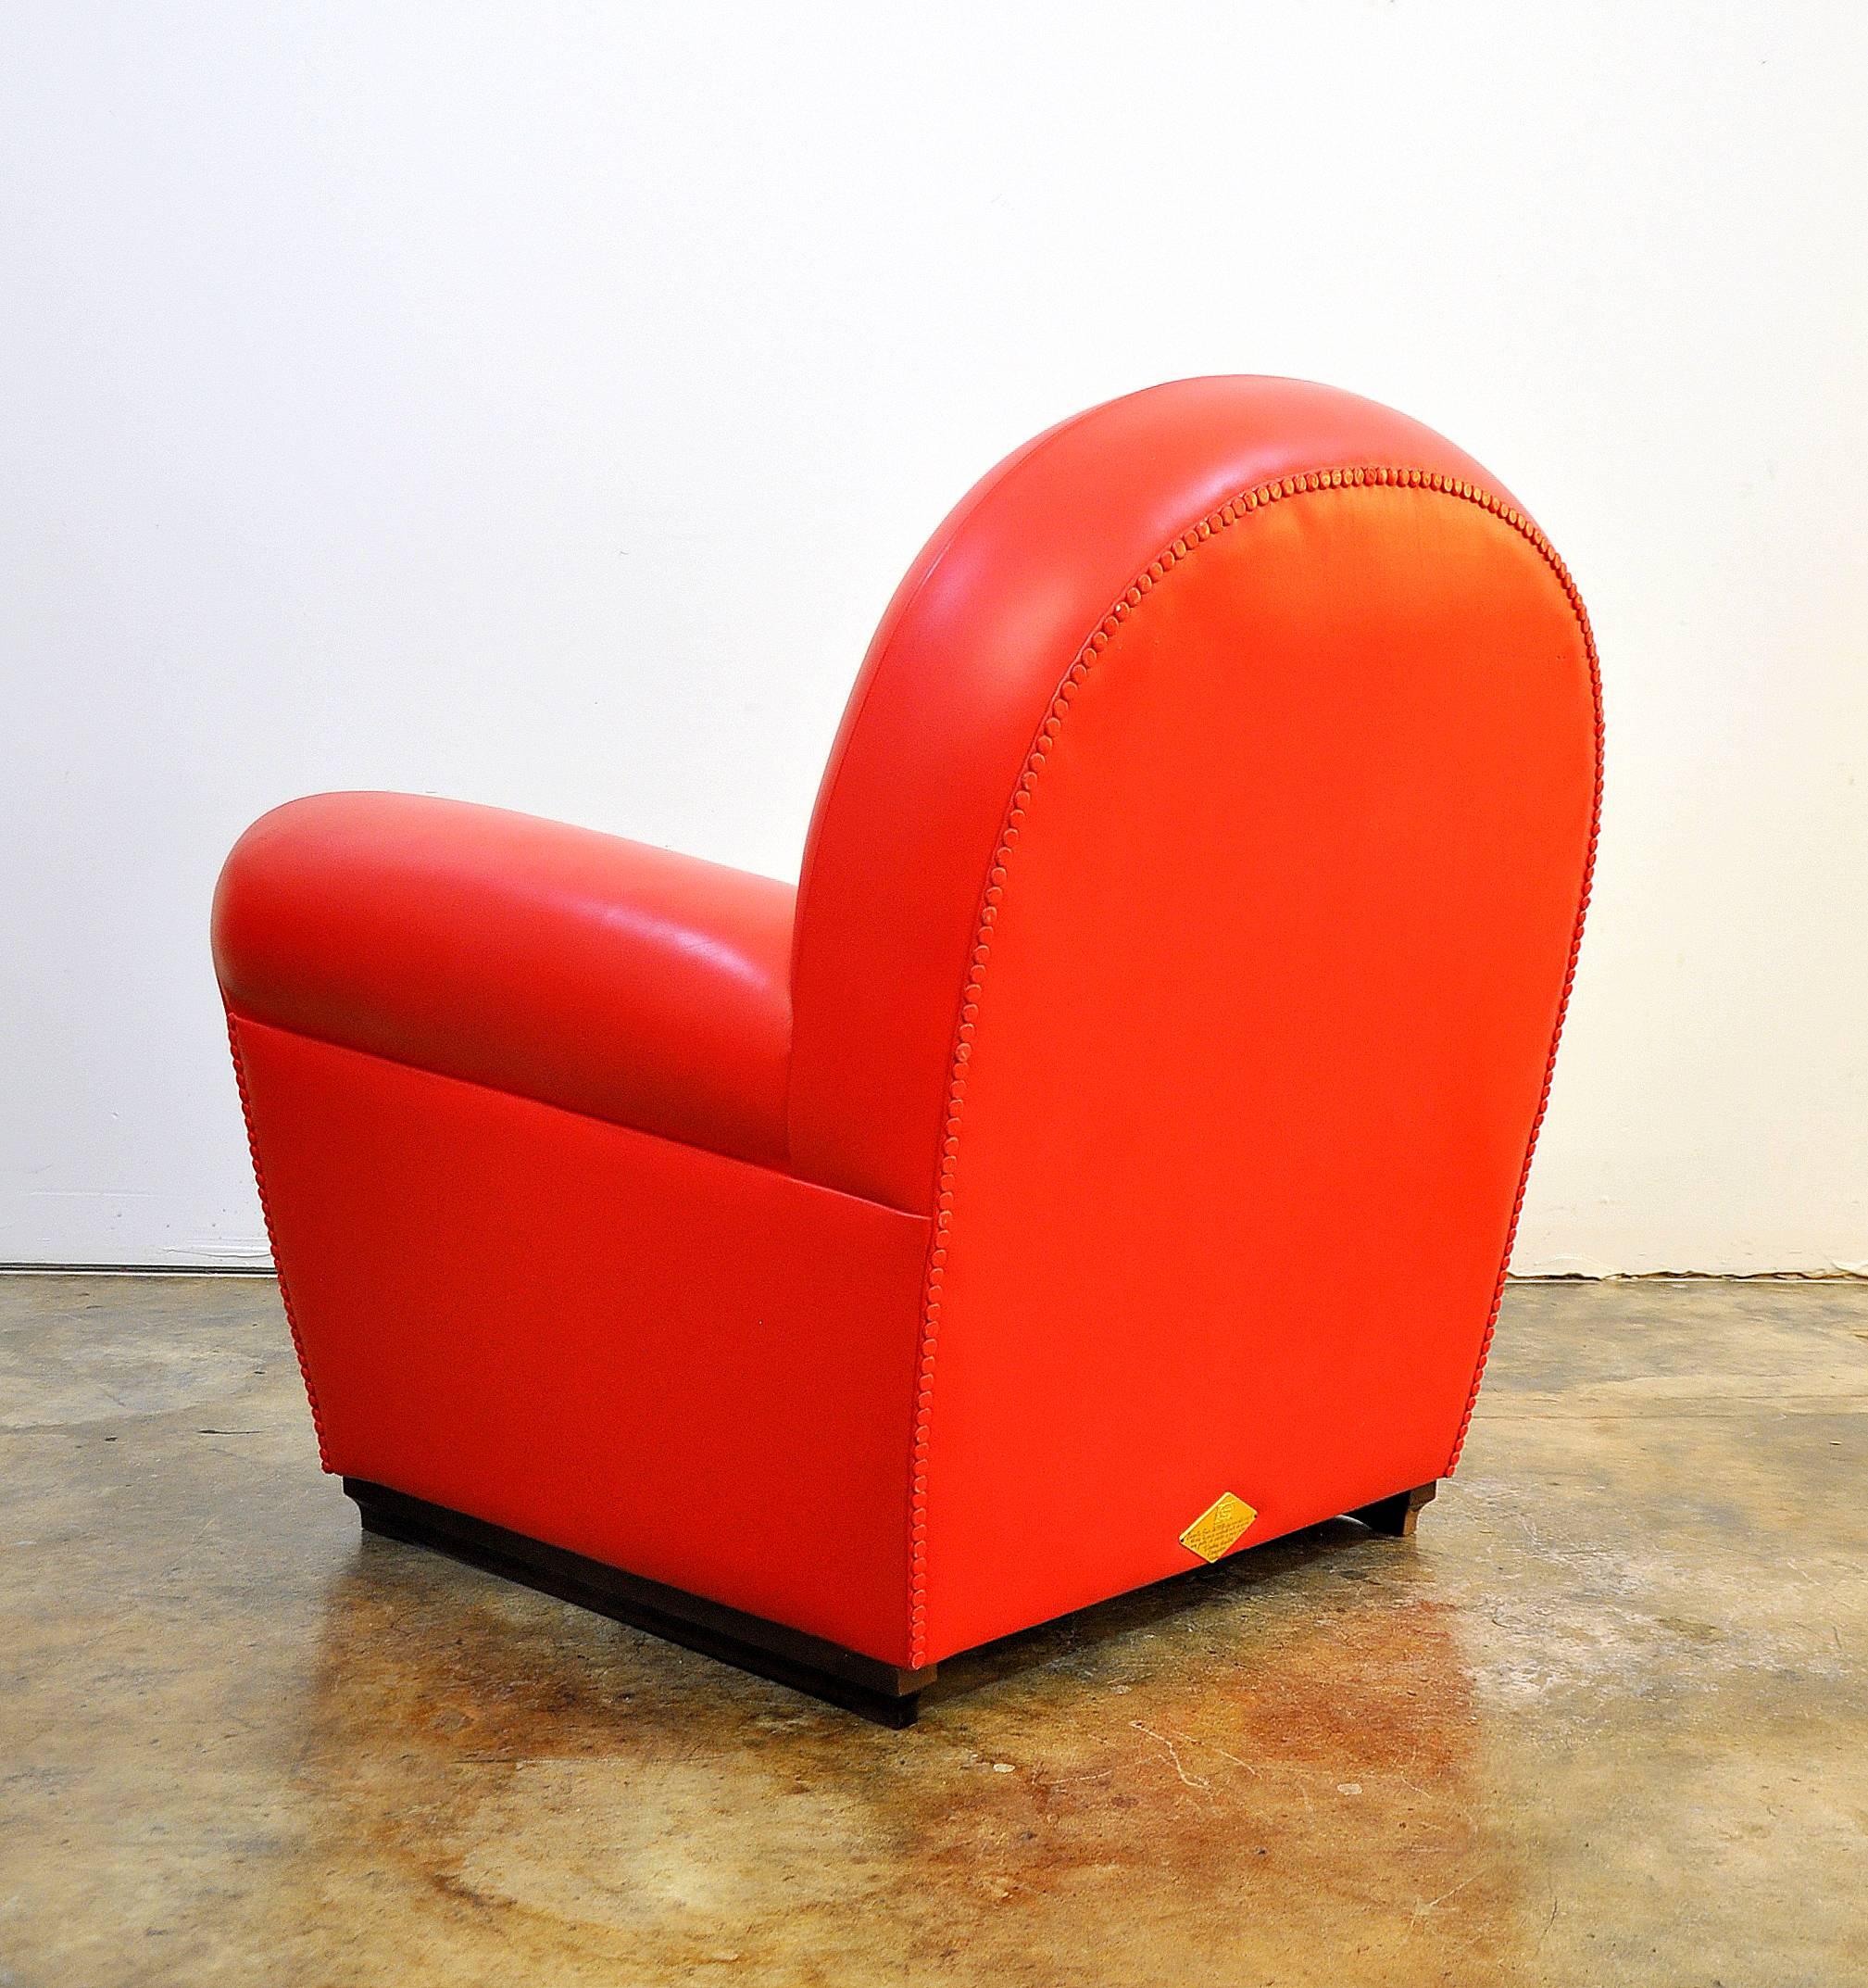 Art Deco Poltrona Frau Vanity Fair Red Leather Club Chair